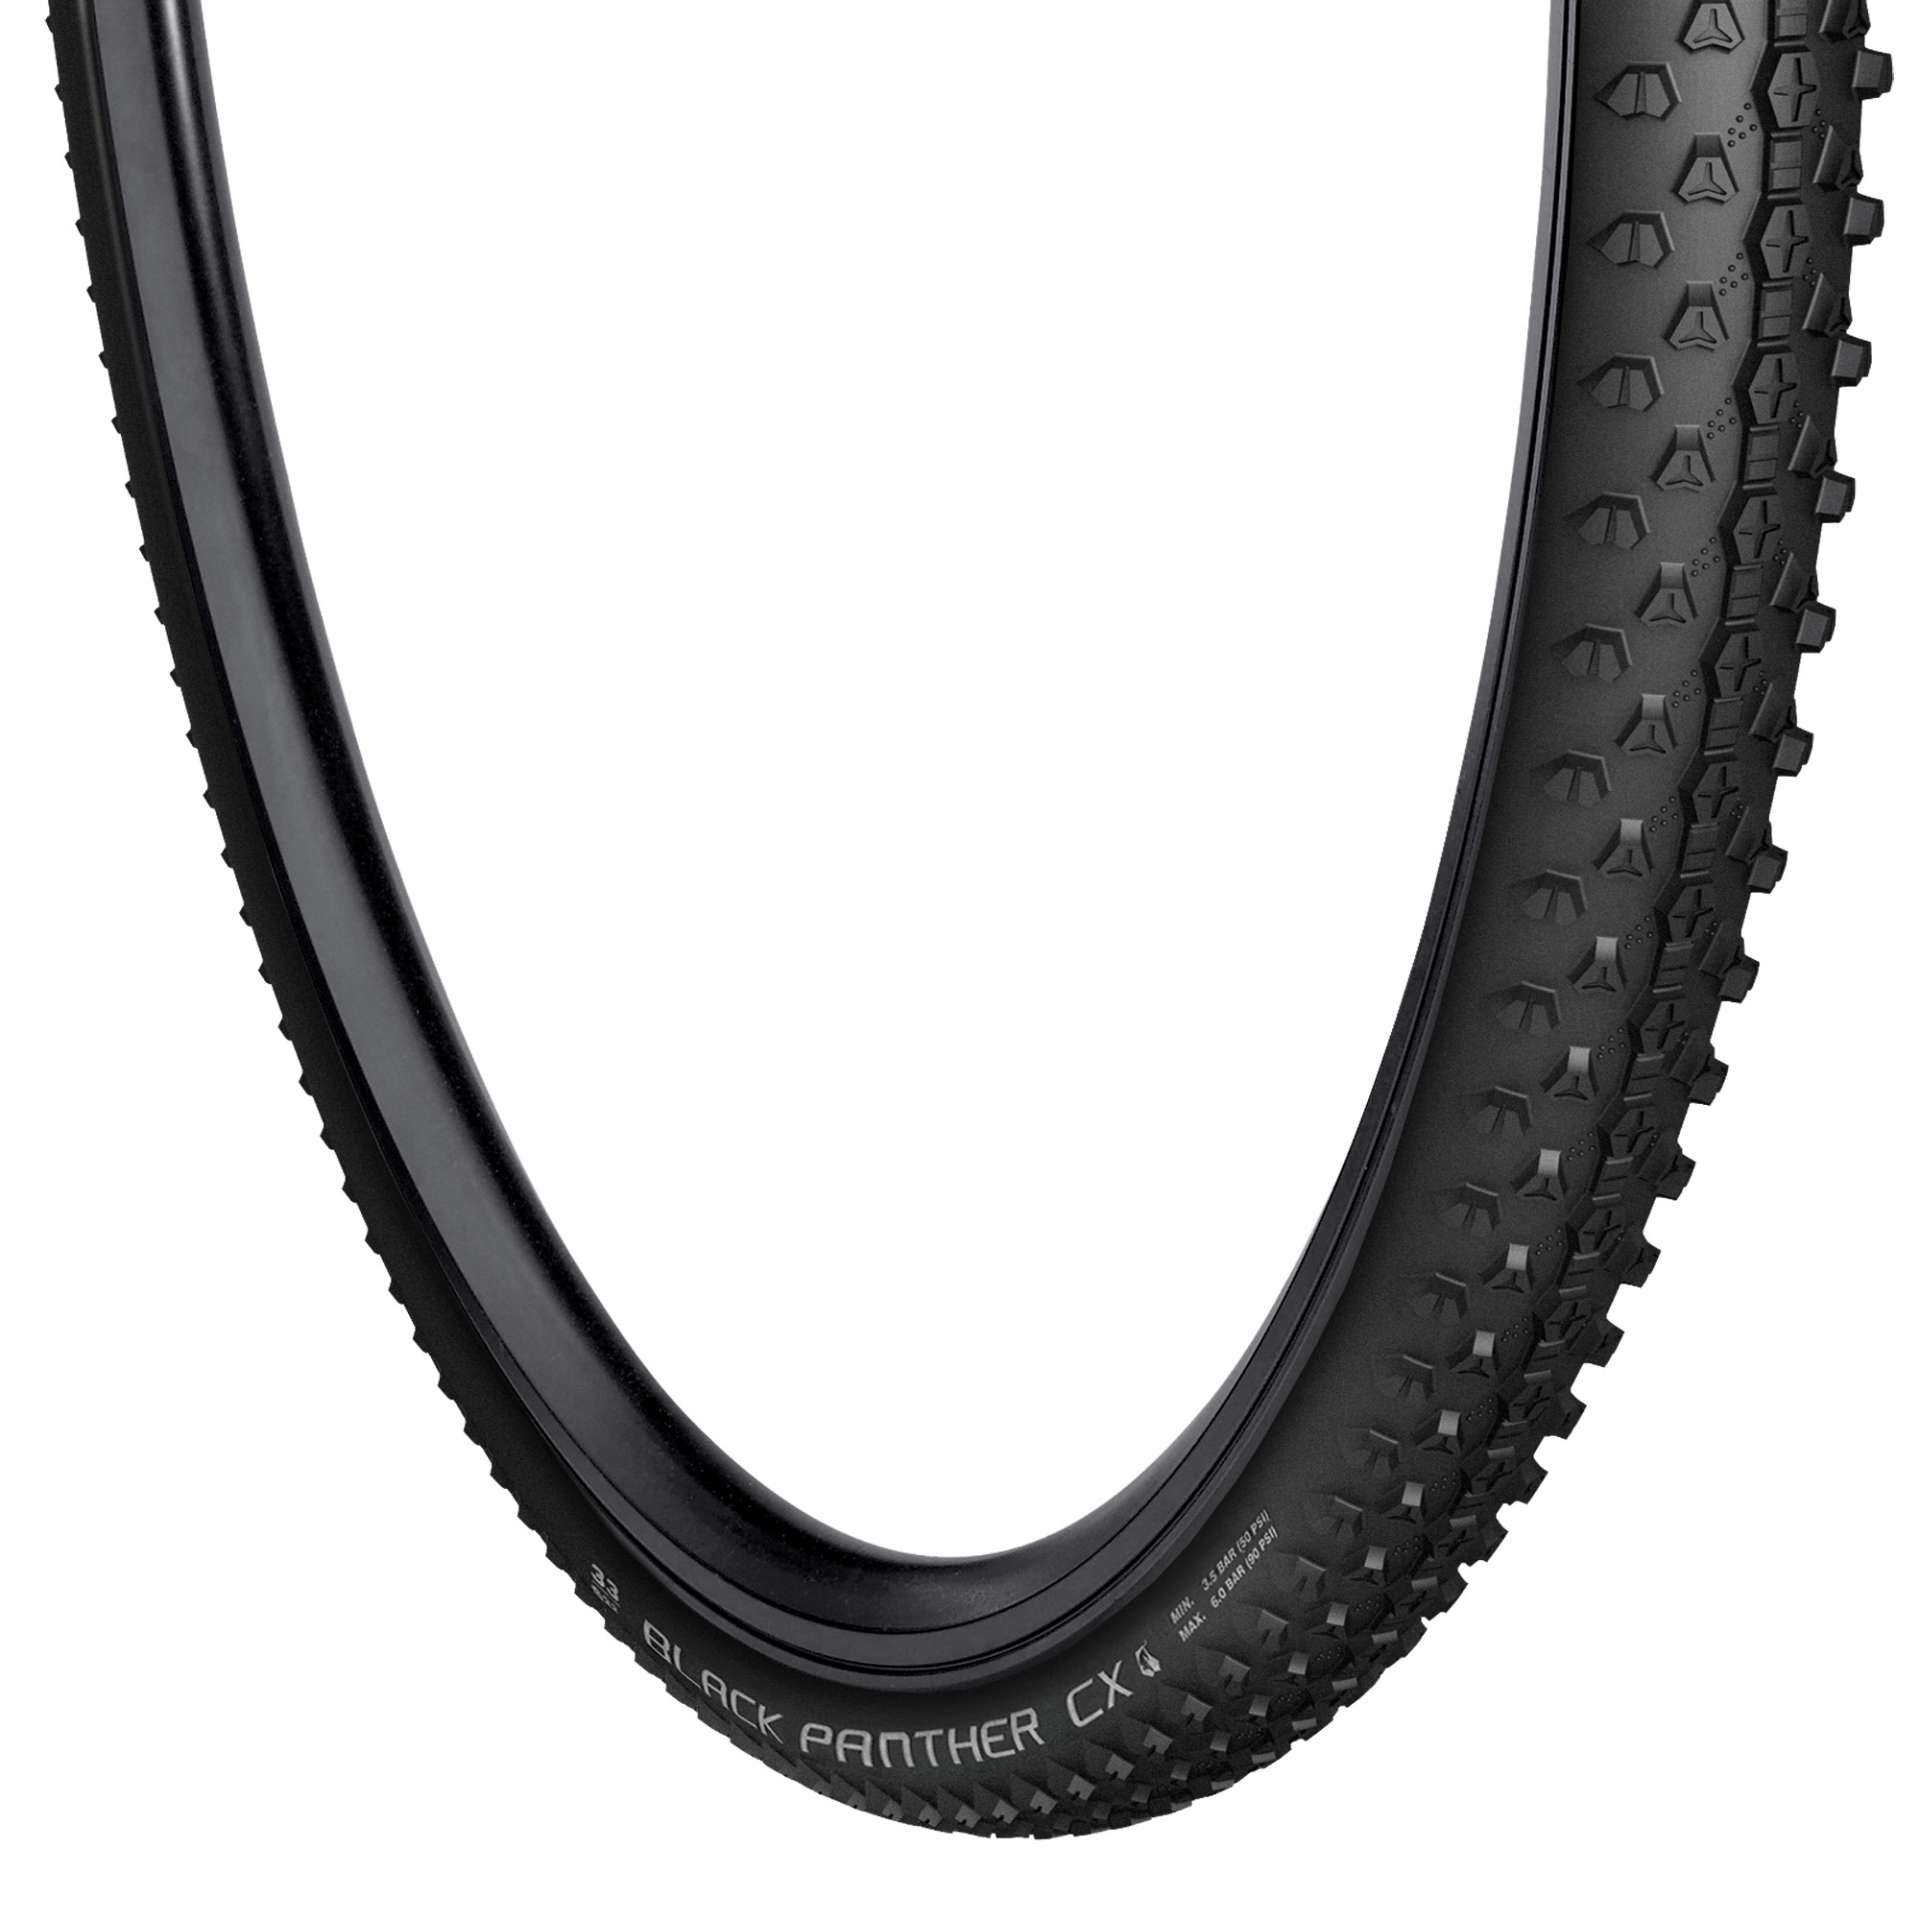 Vredestein Black Panther CX 700x33C Cyclocrossband